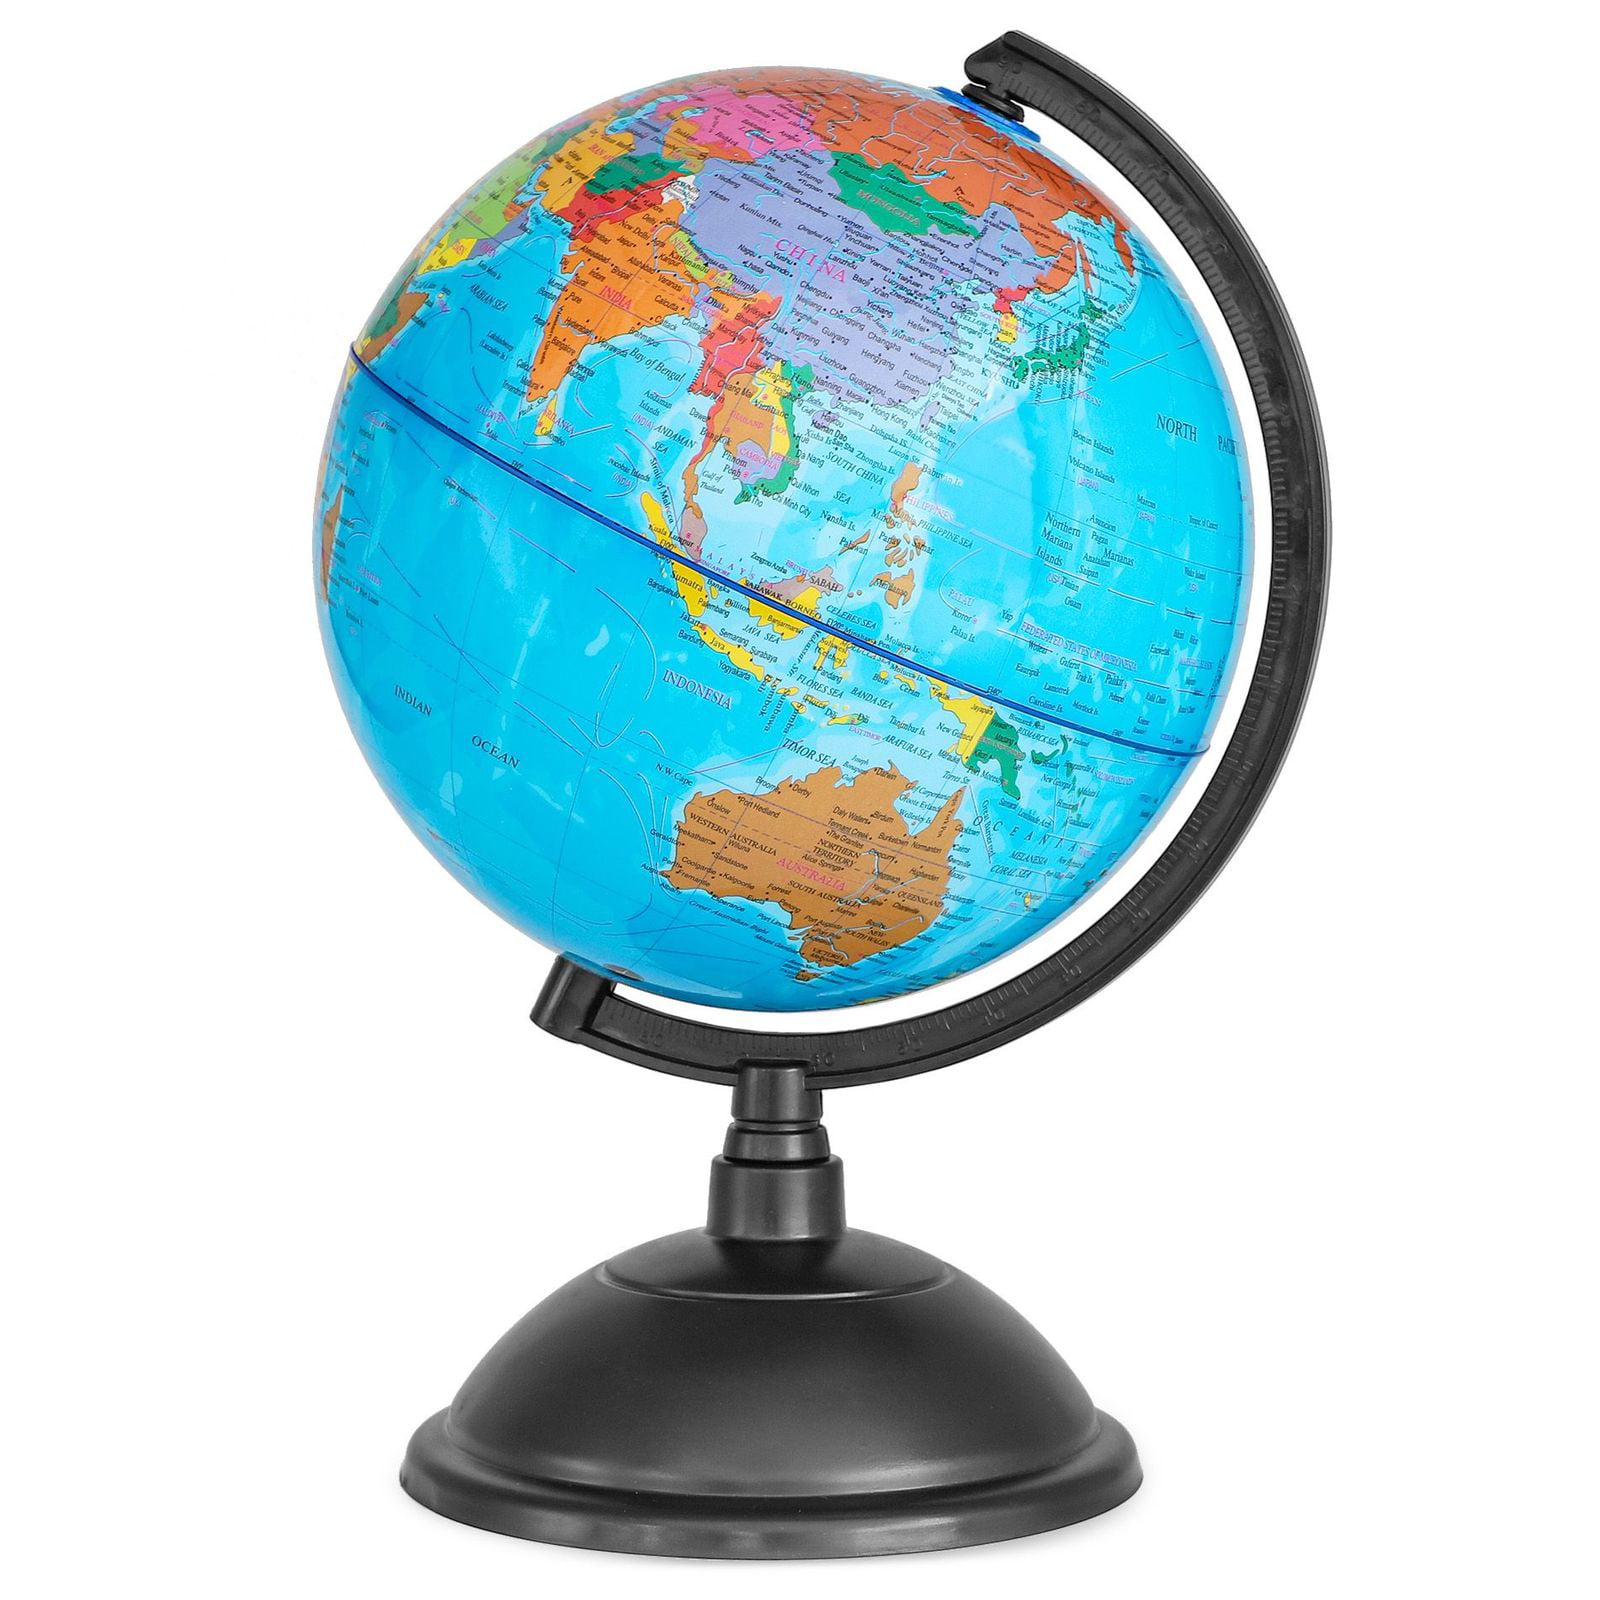 World Map Stainless Steel Round Stud Earrings Cute Globe Earth Gift for Traveler 3 Tone 